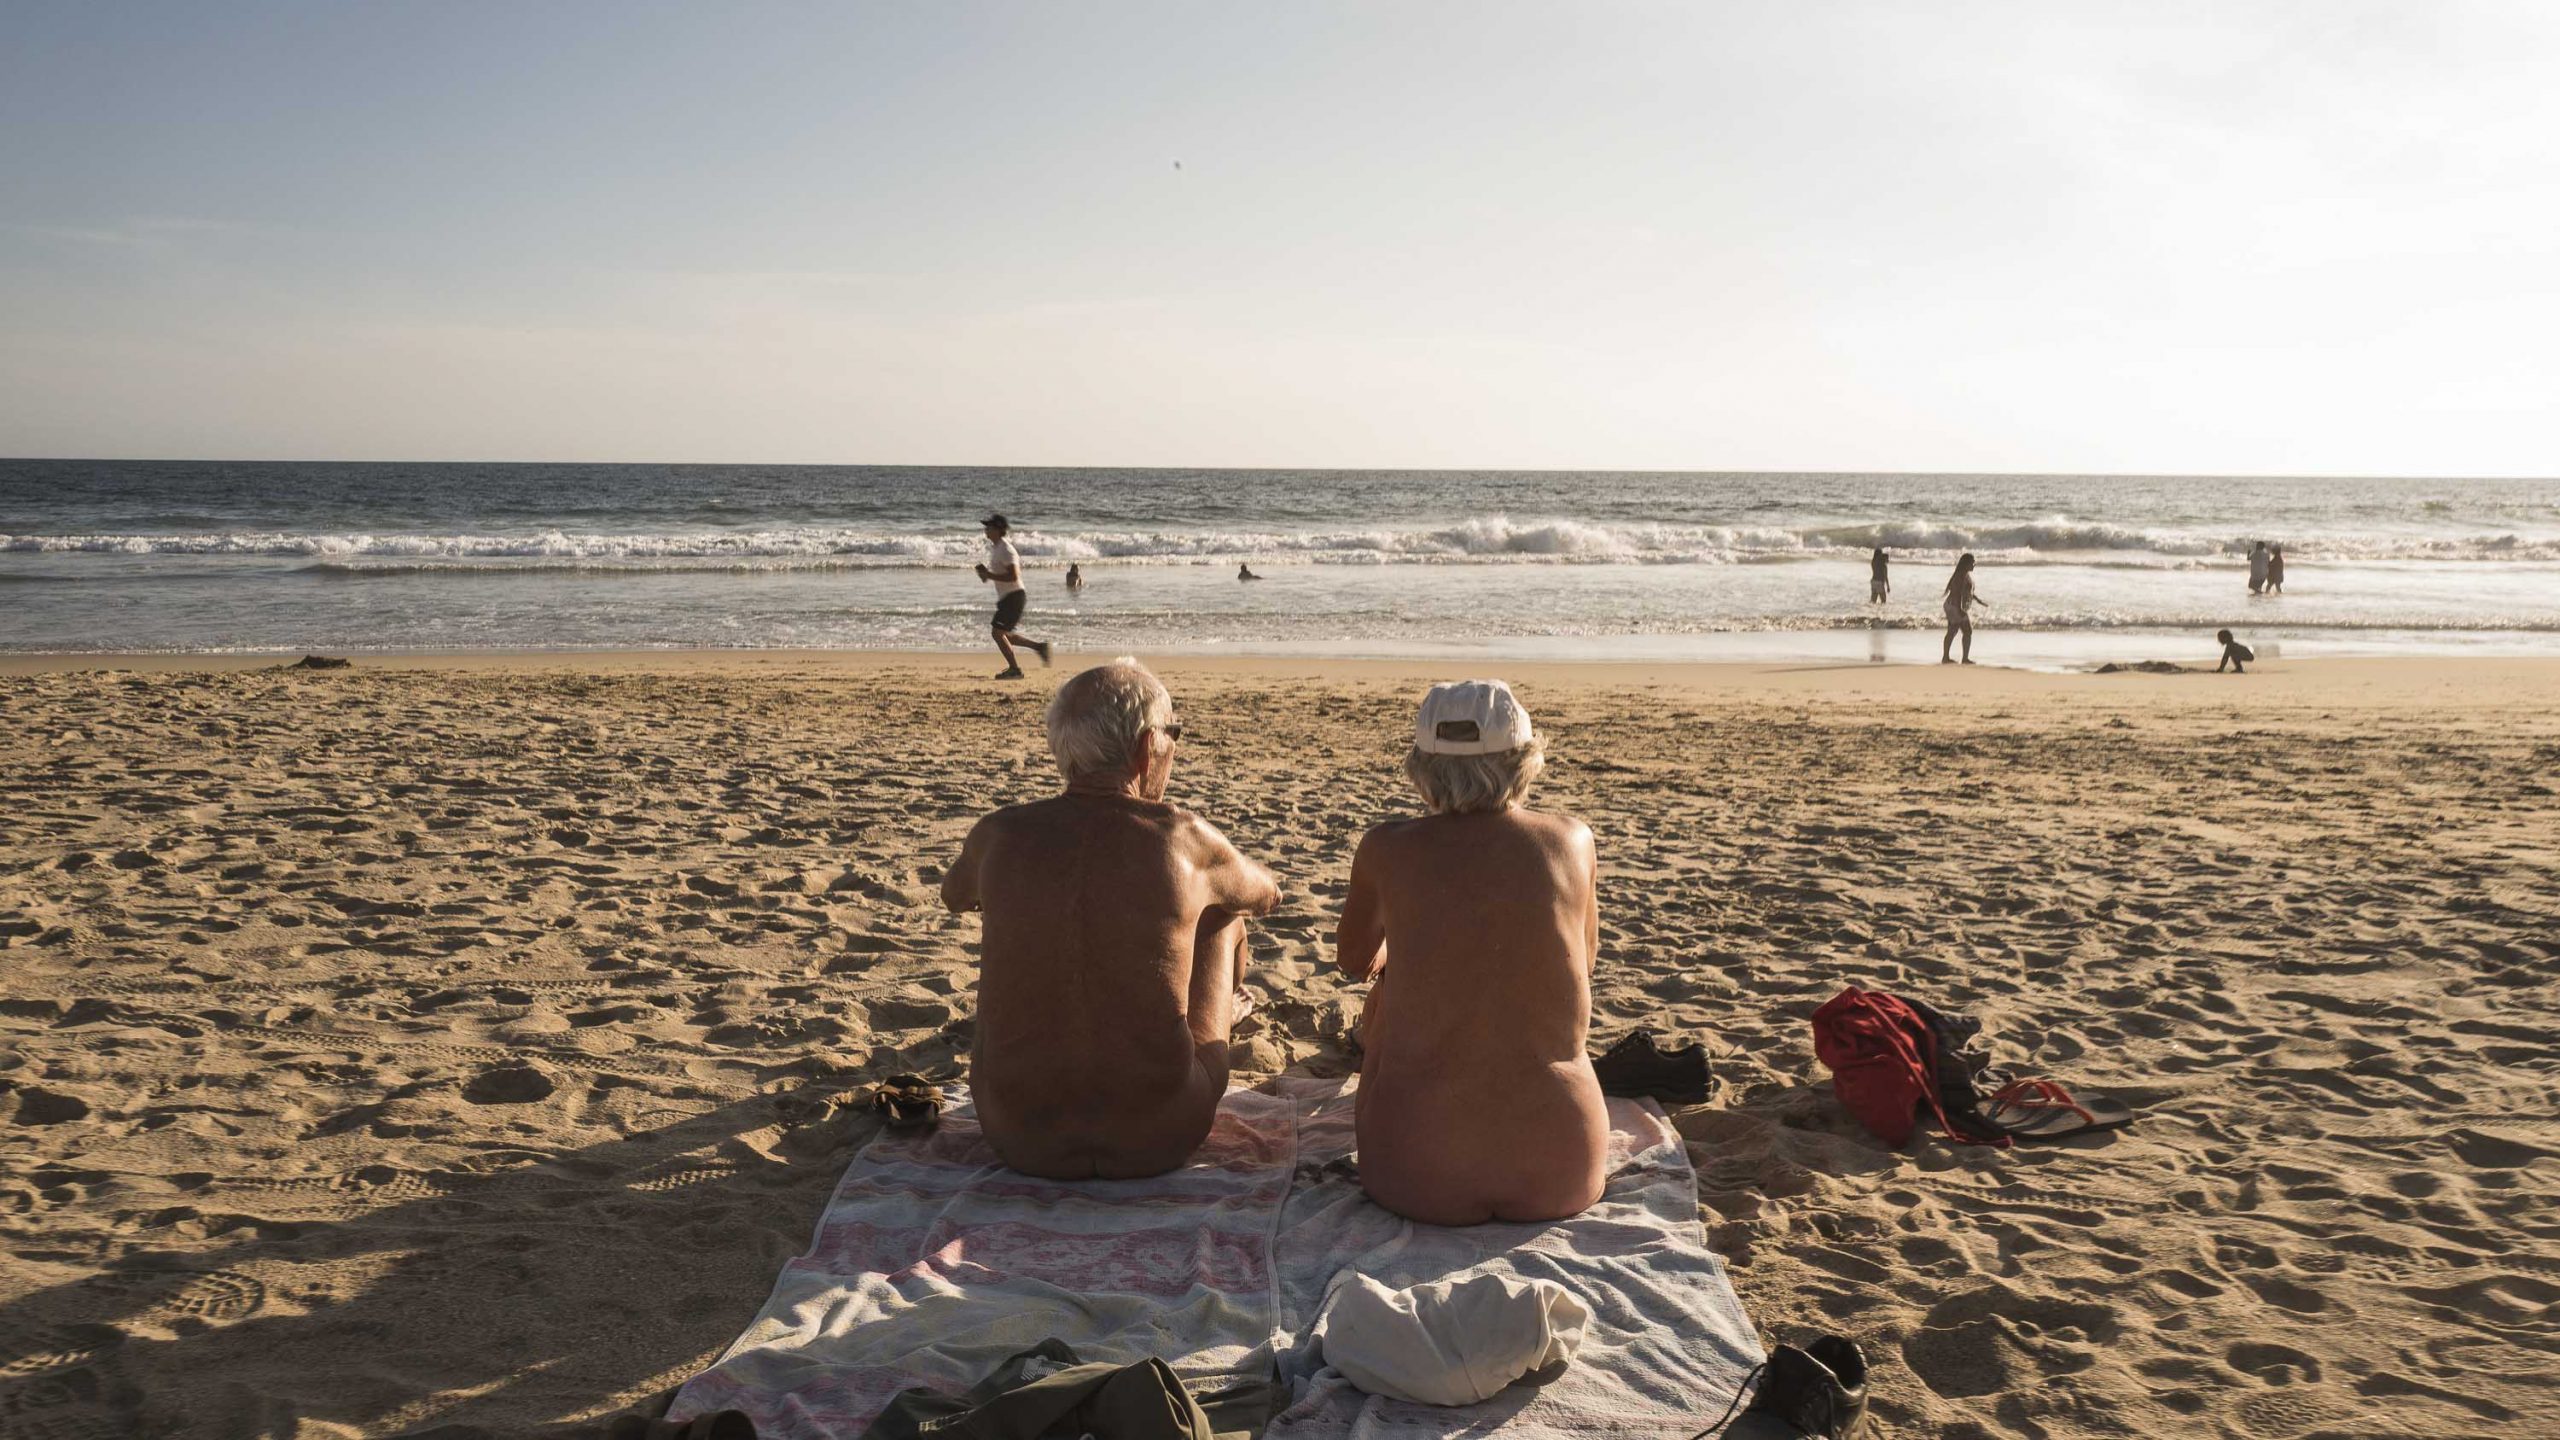 Fkk Naturist Beach Nude - Behind the scenes at Mexico's secret nudist town | Adventure.com